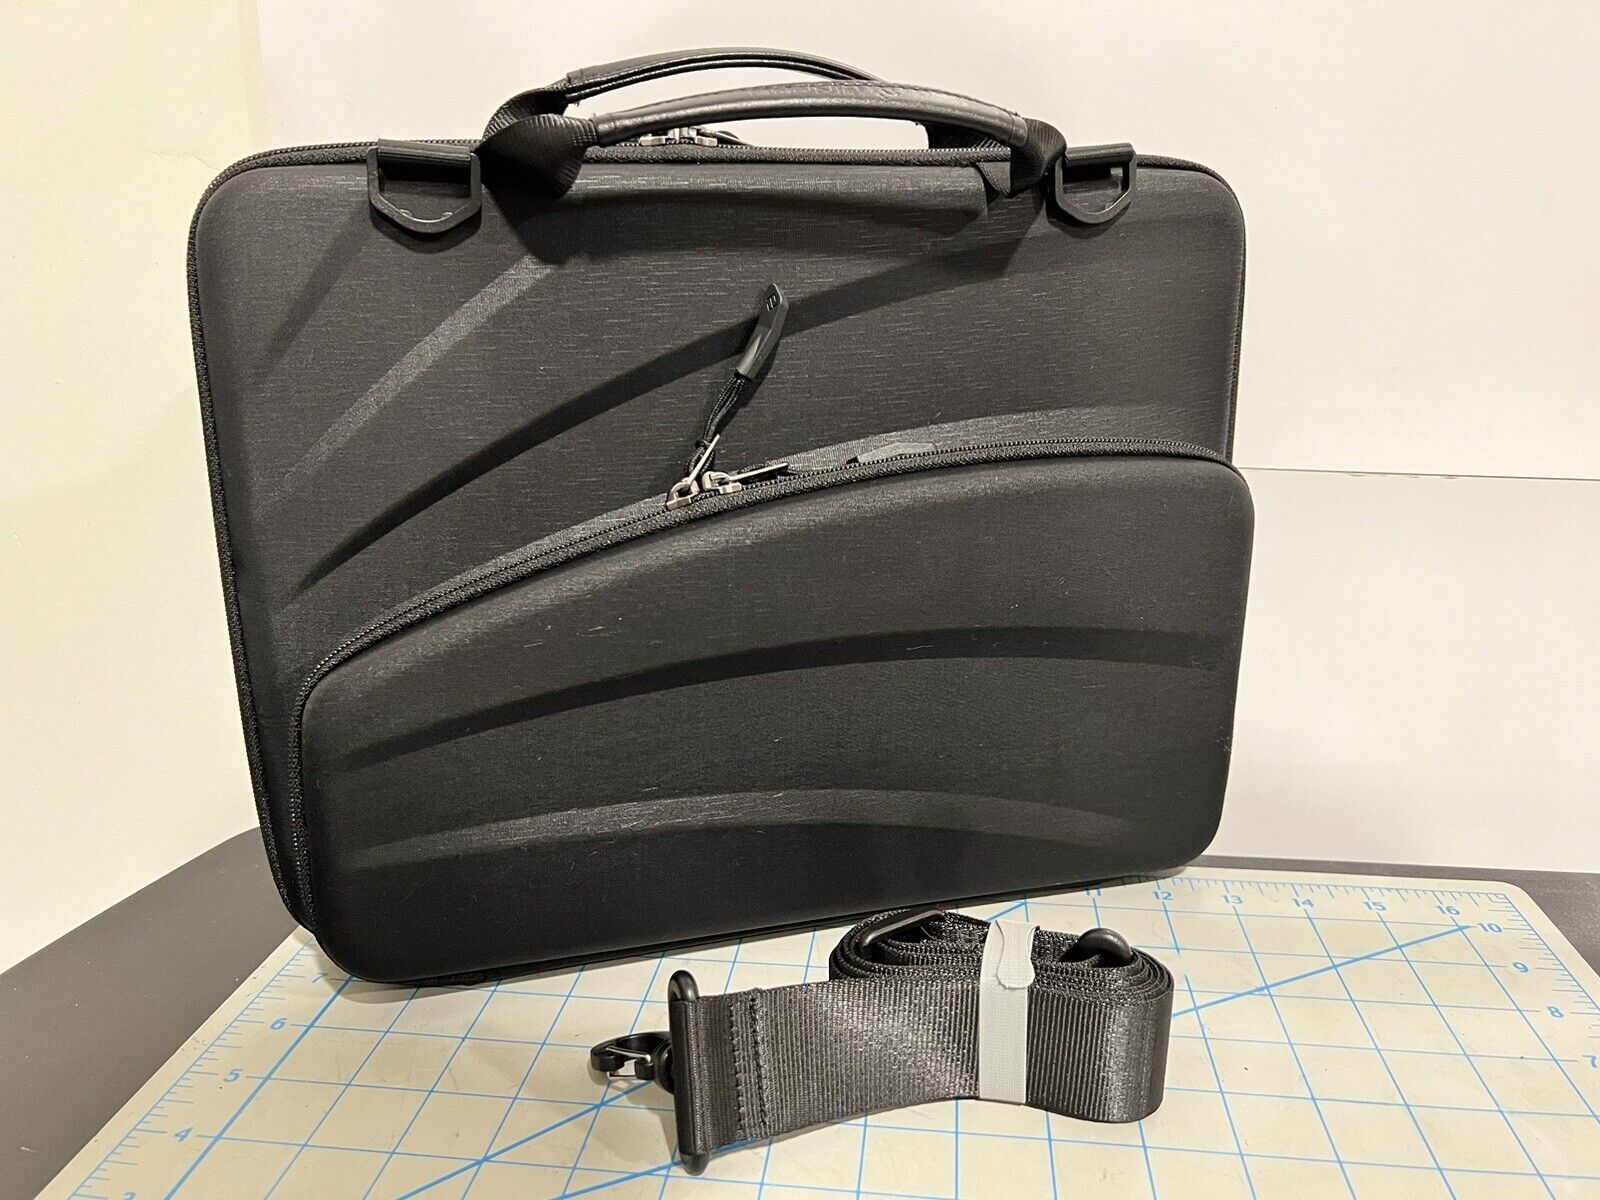 FINPAC 13-14 Inch Laptop Sleeve Case Briefcase Shoulder Bag with Black